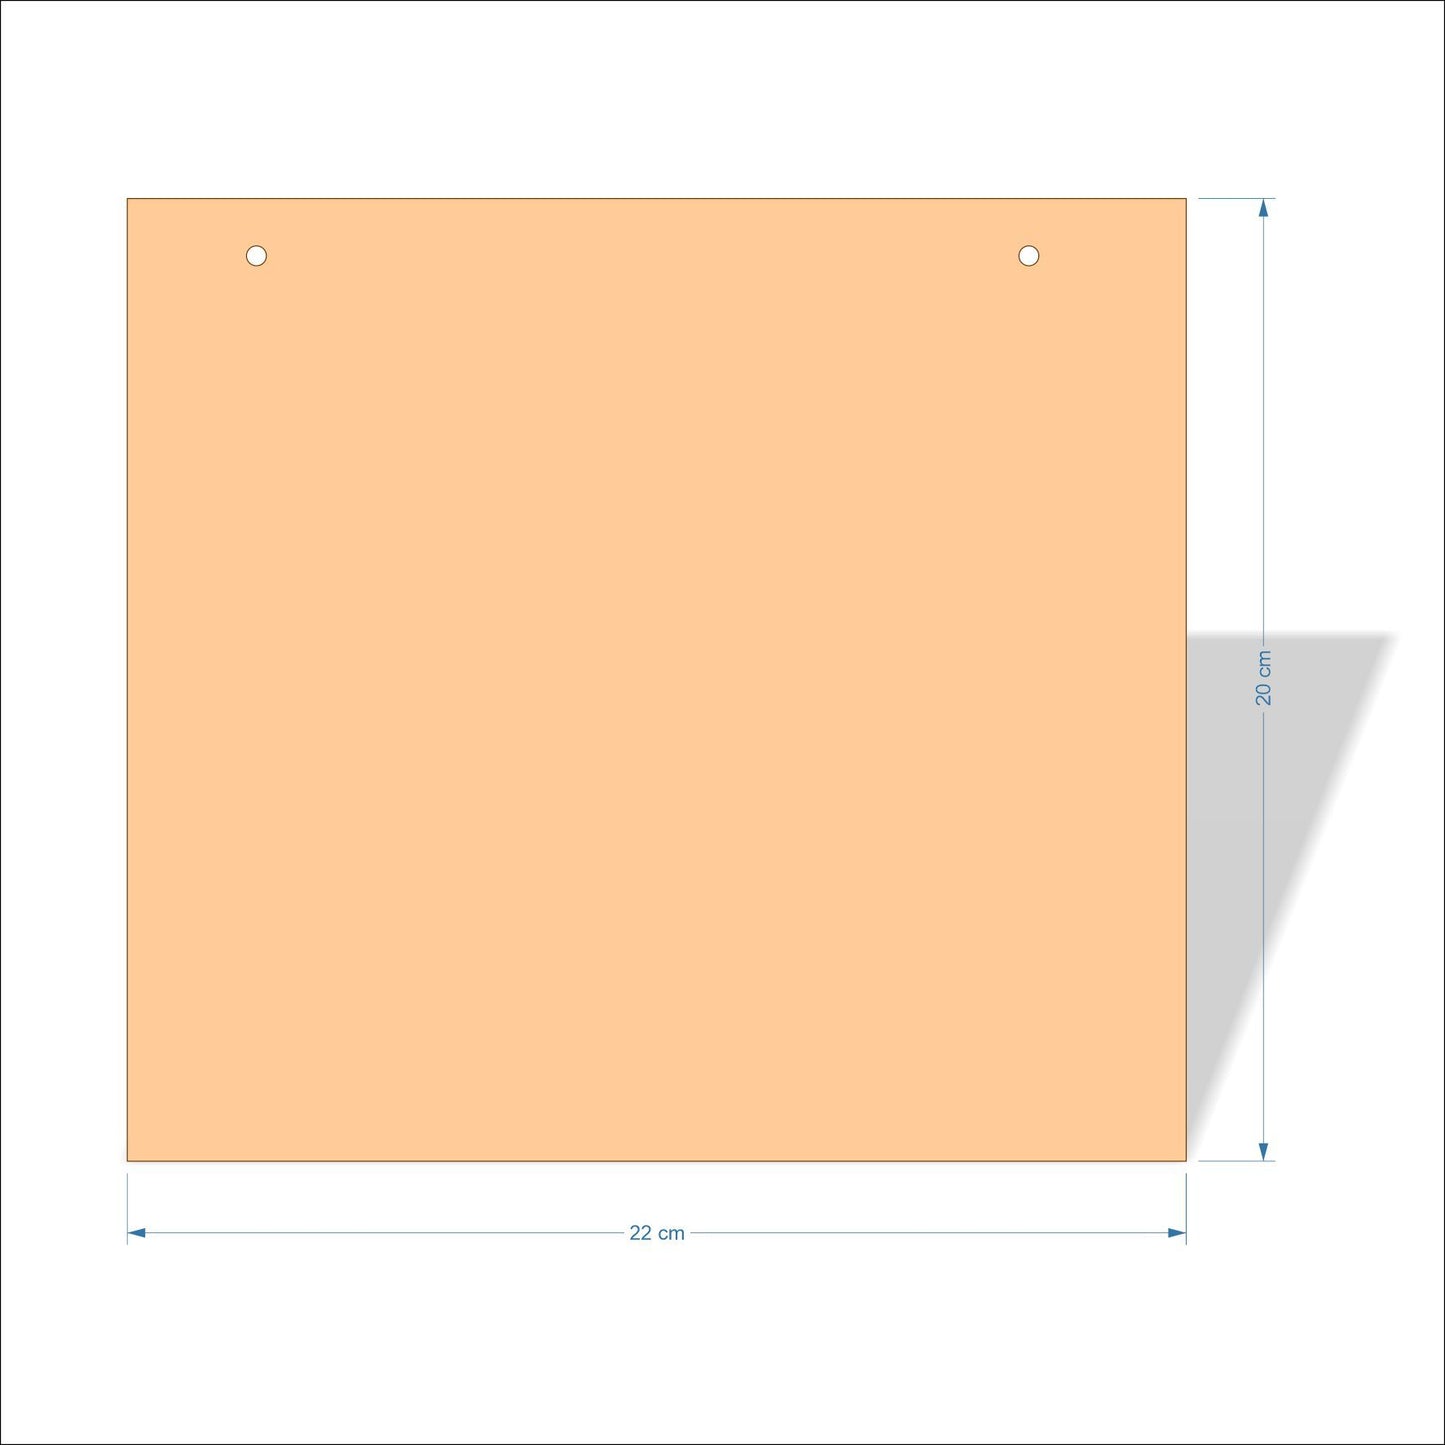 22 cm X 20 cm 3mm MDF Plaques with square corners